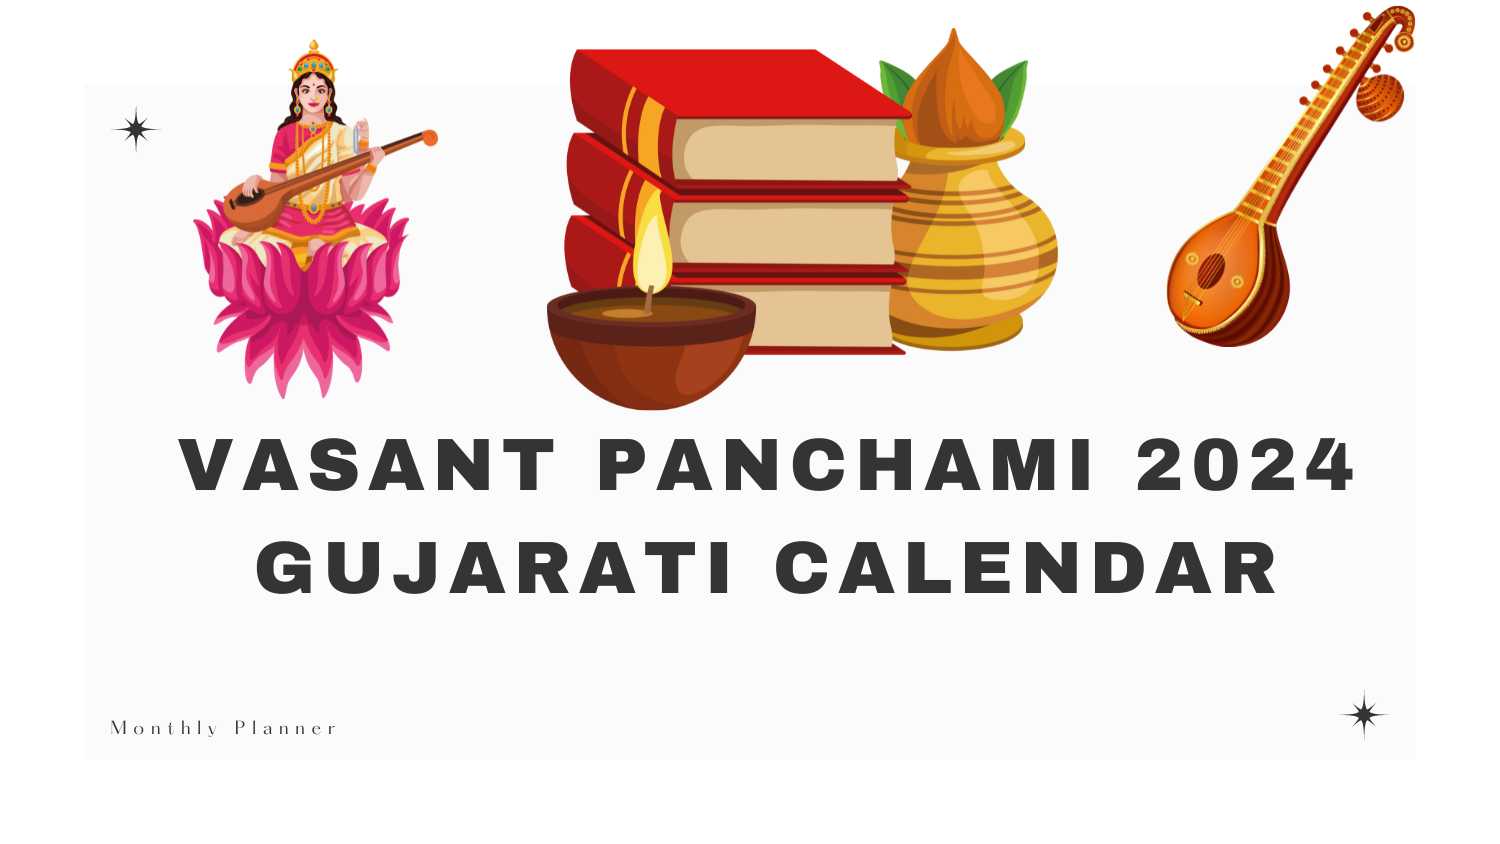 Vasant Panchami 2024 Gujarati Calendar